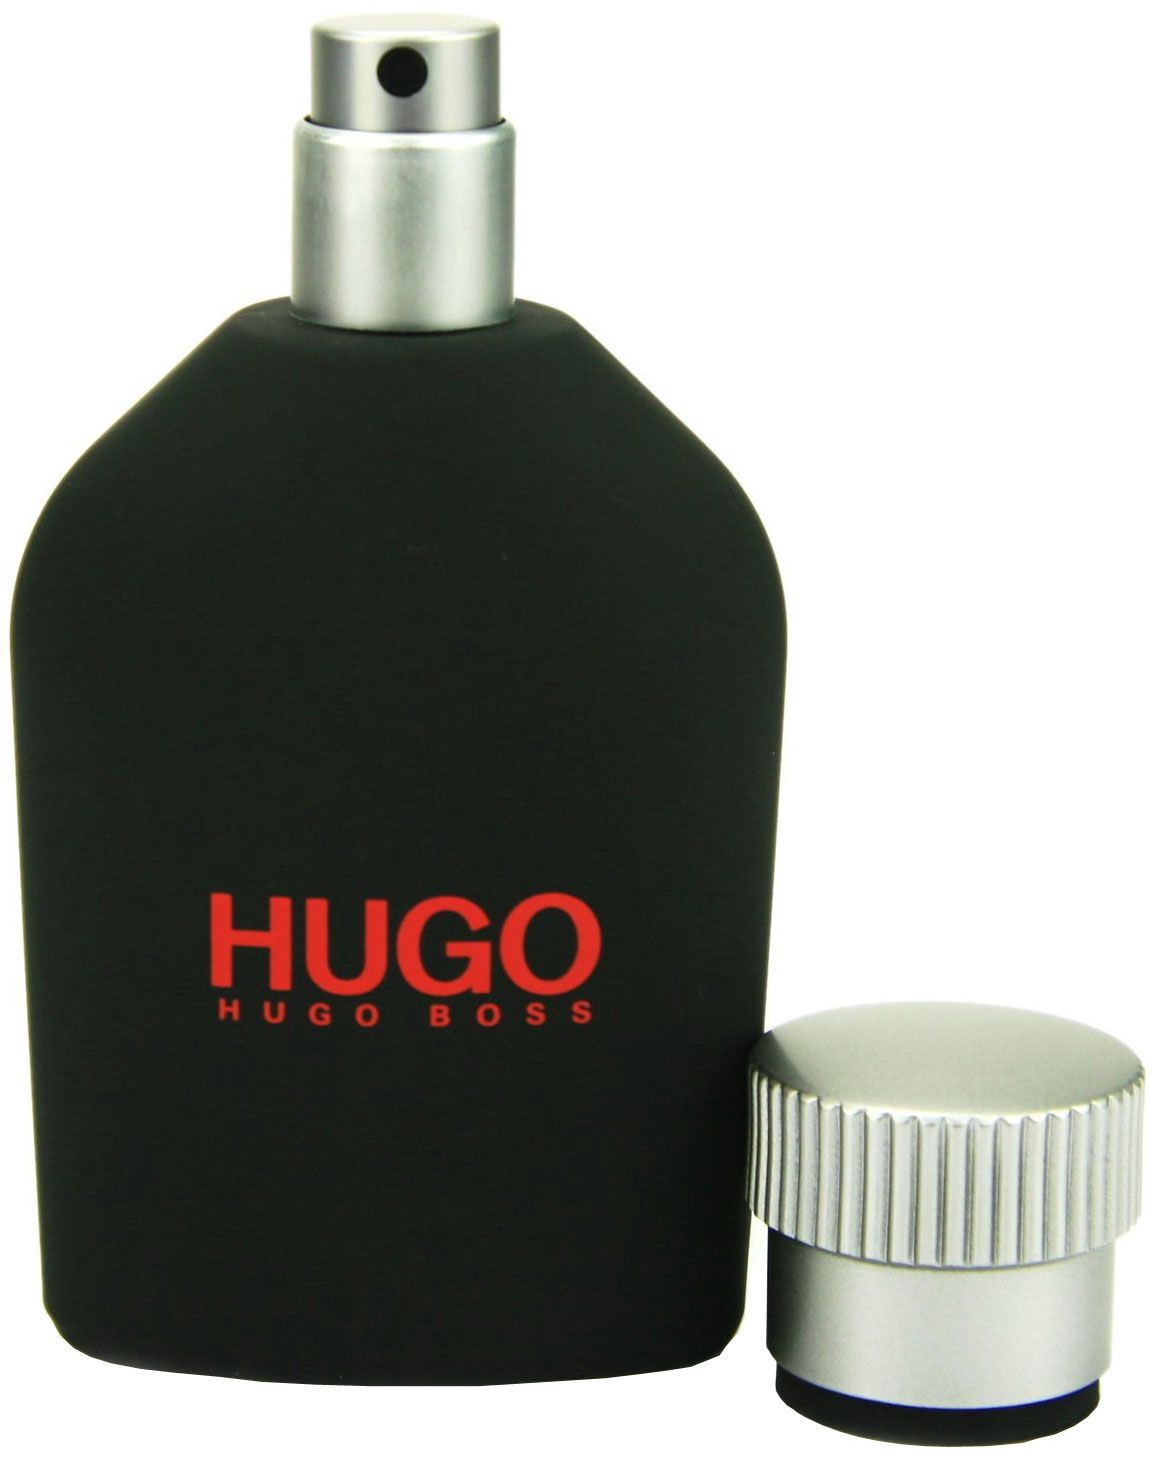 hugo boss just different 40ml